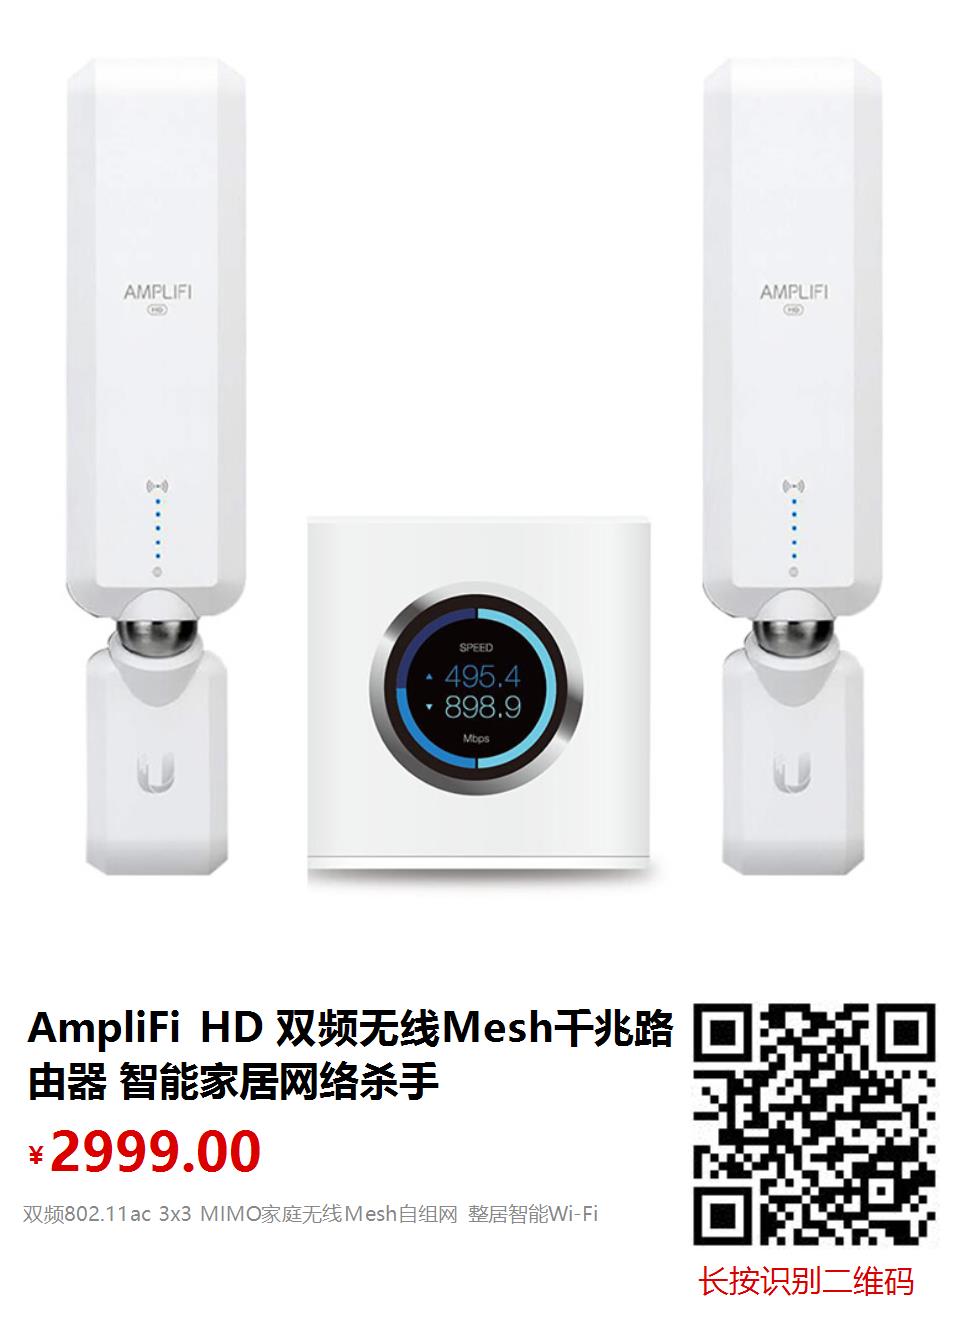 AmpliFi HD 双频无线Mesh千兆路由器 智能家居网络杀手.jpg